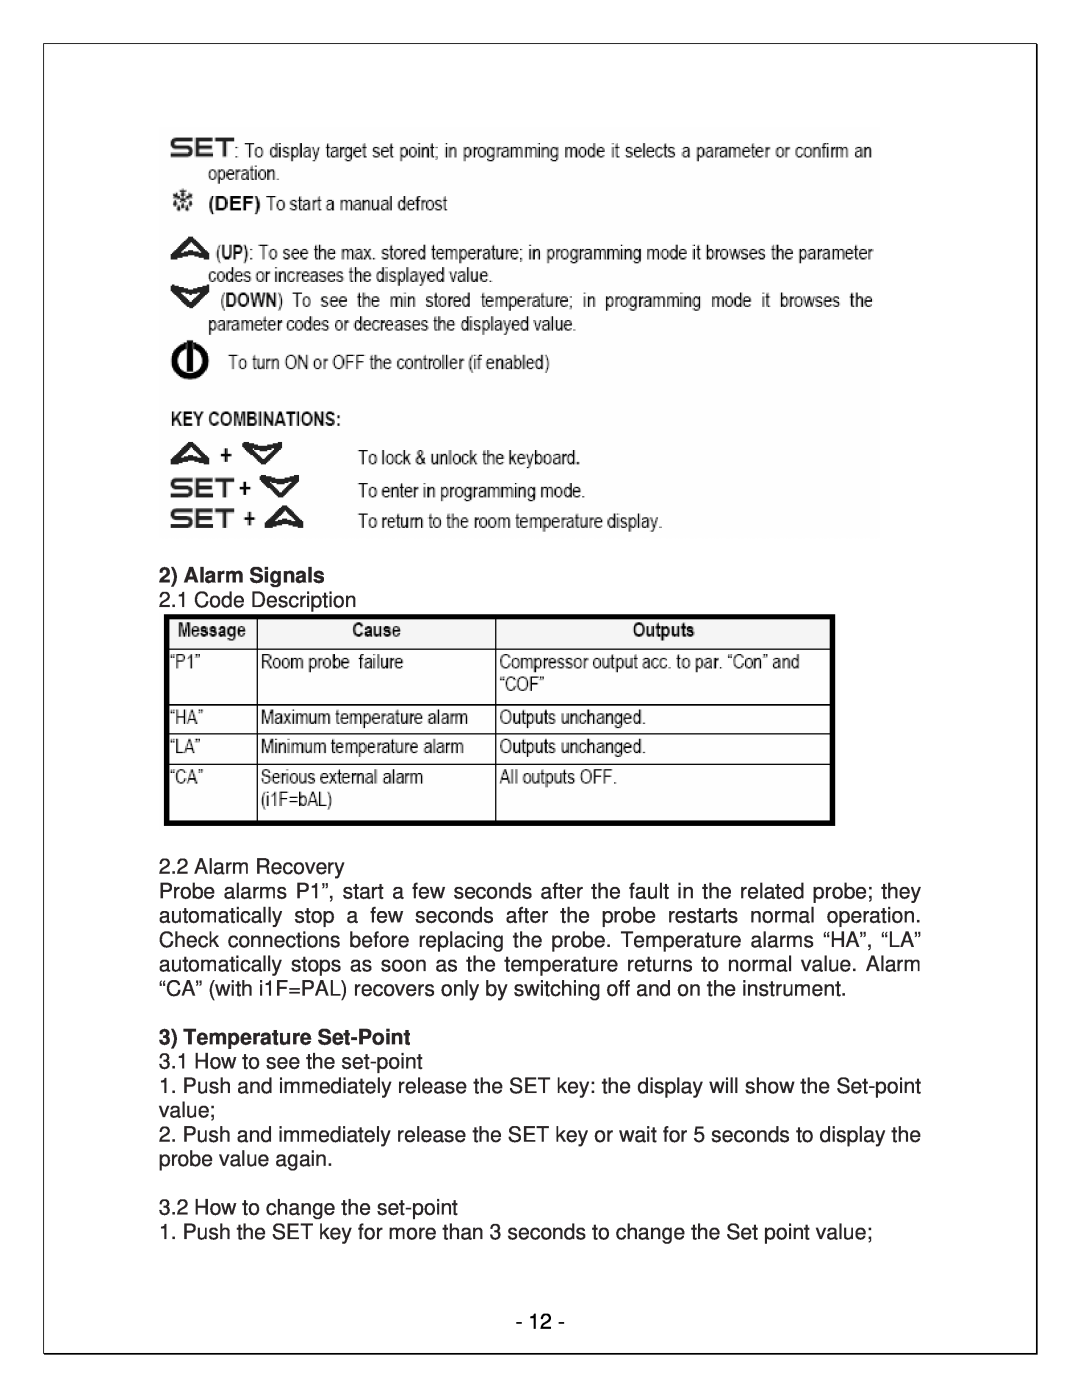 Vinotemp WM-15SFCW, WM-25SFCW manual Alarm Signals 2.1 Code Description 2.2 Alarm Recovery, How to change the set-point 